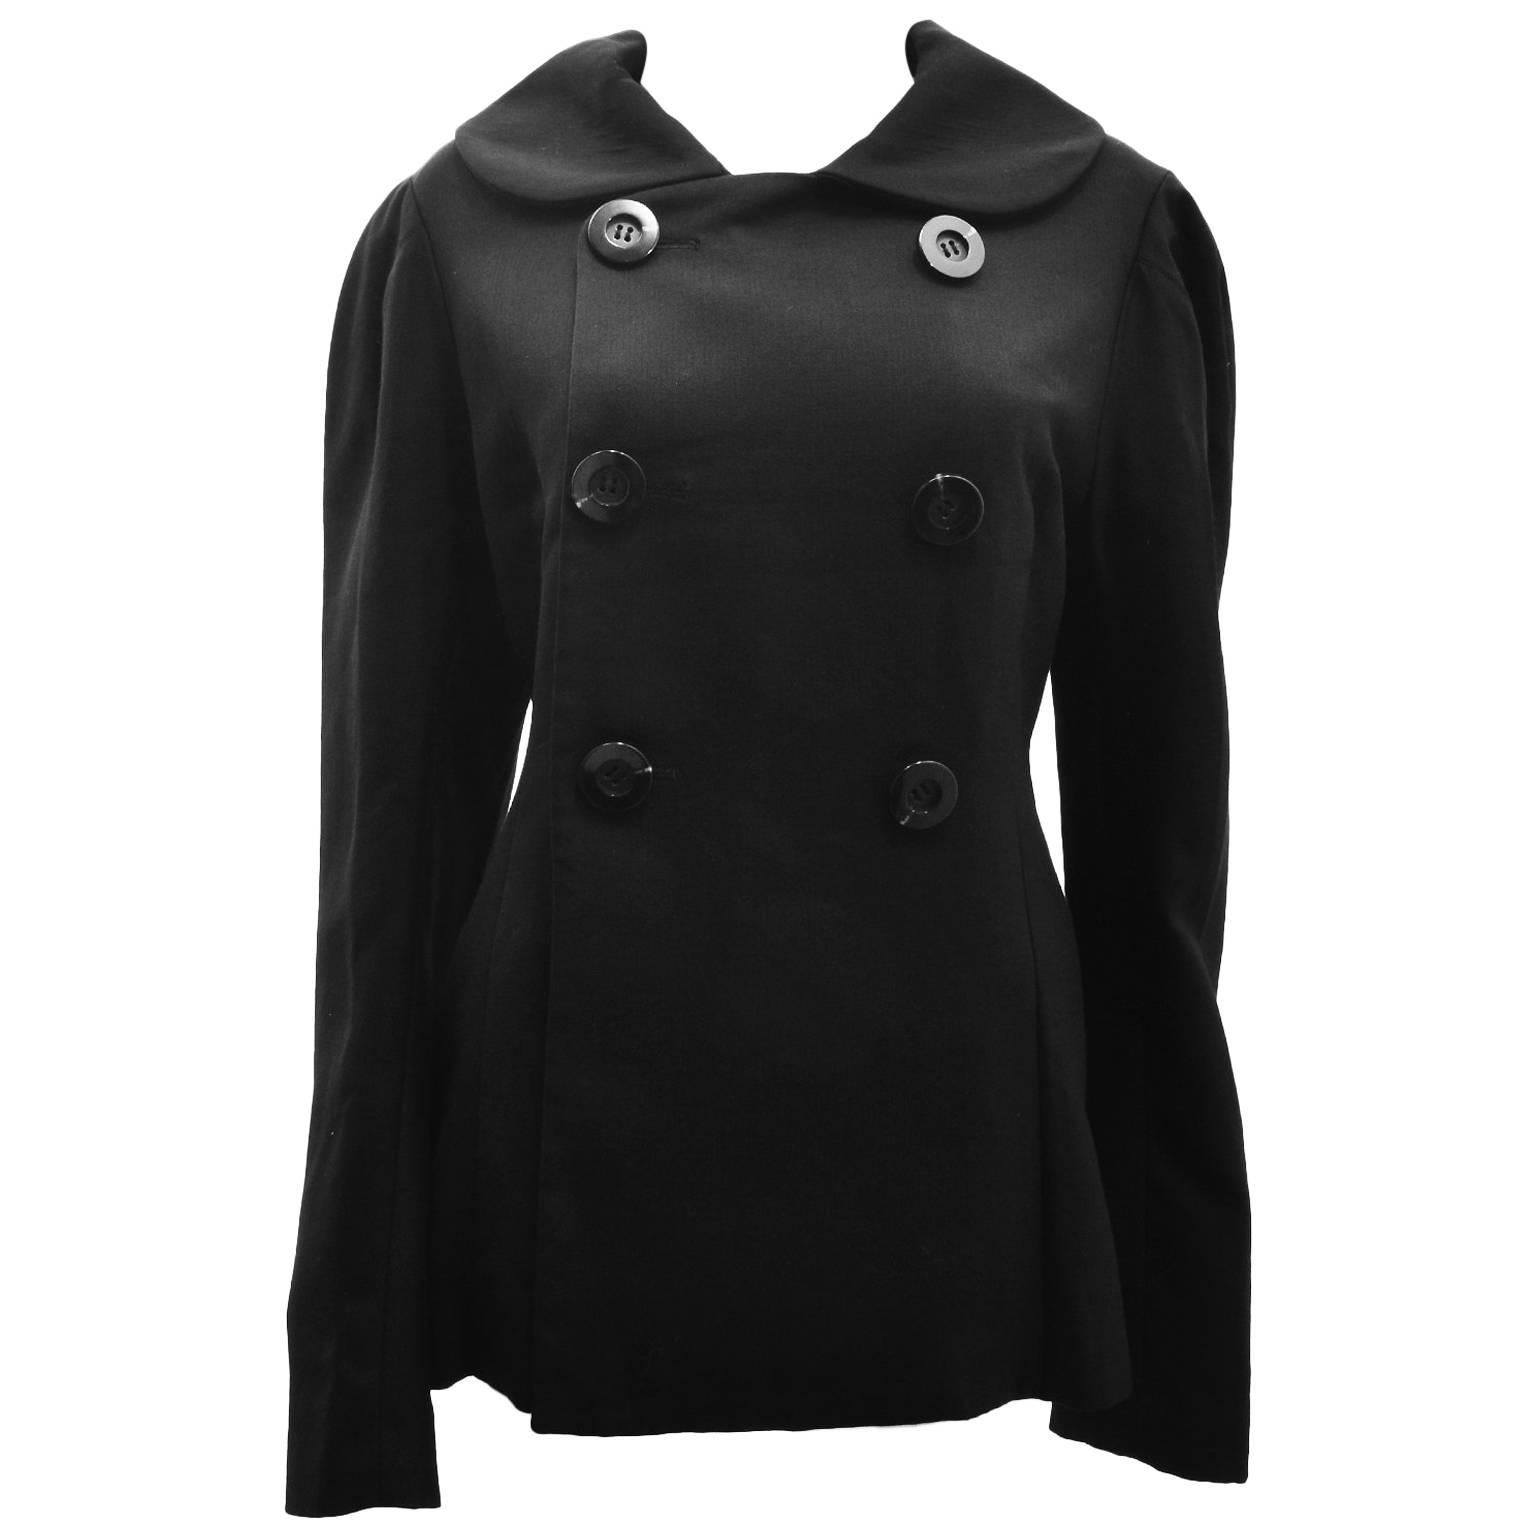 Yohji Yamamoto Black Double Breasted Jacket with Round Collar Oversized Sleeves For Sale